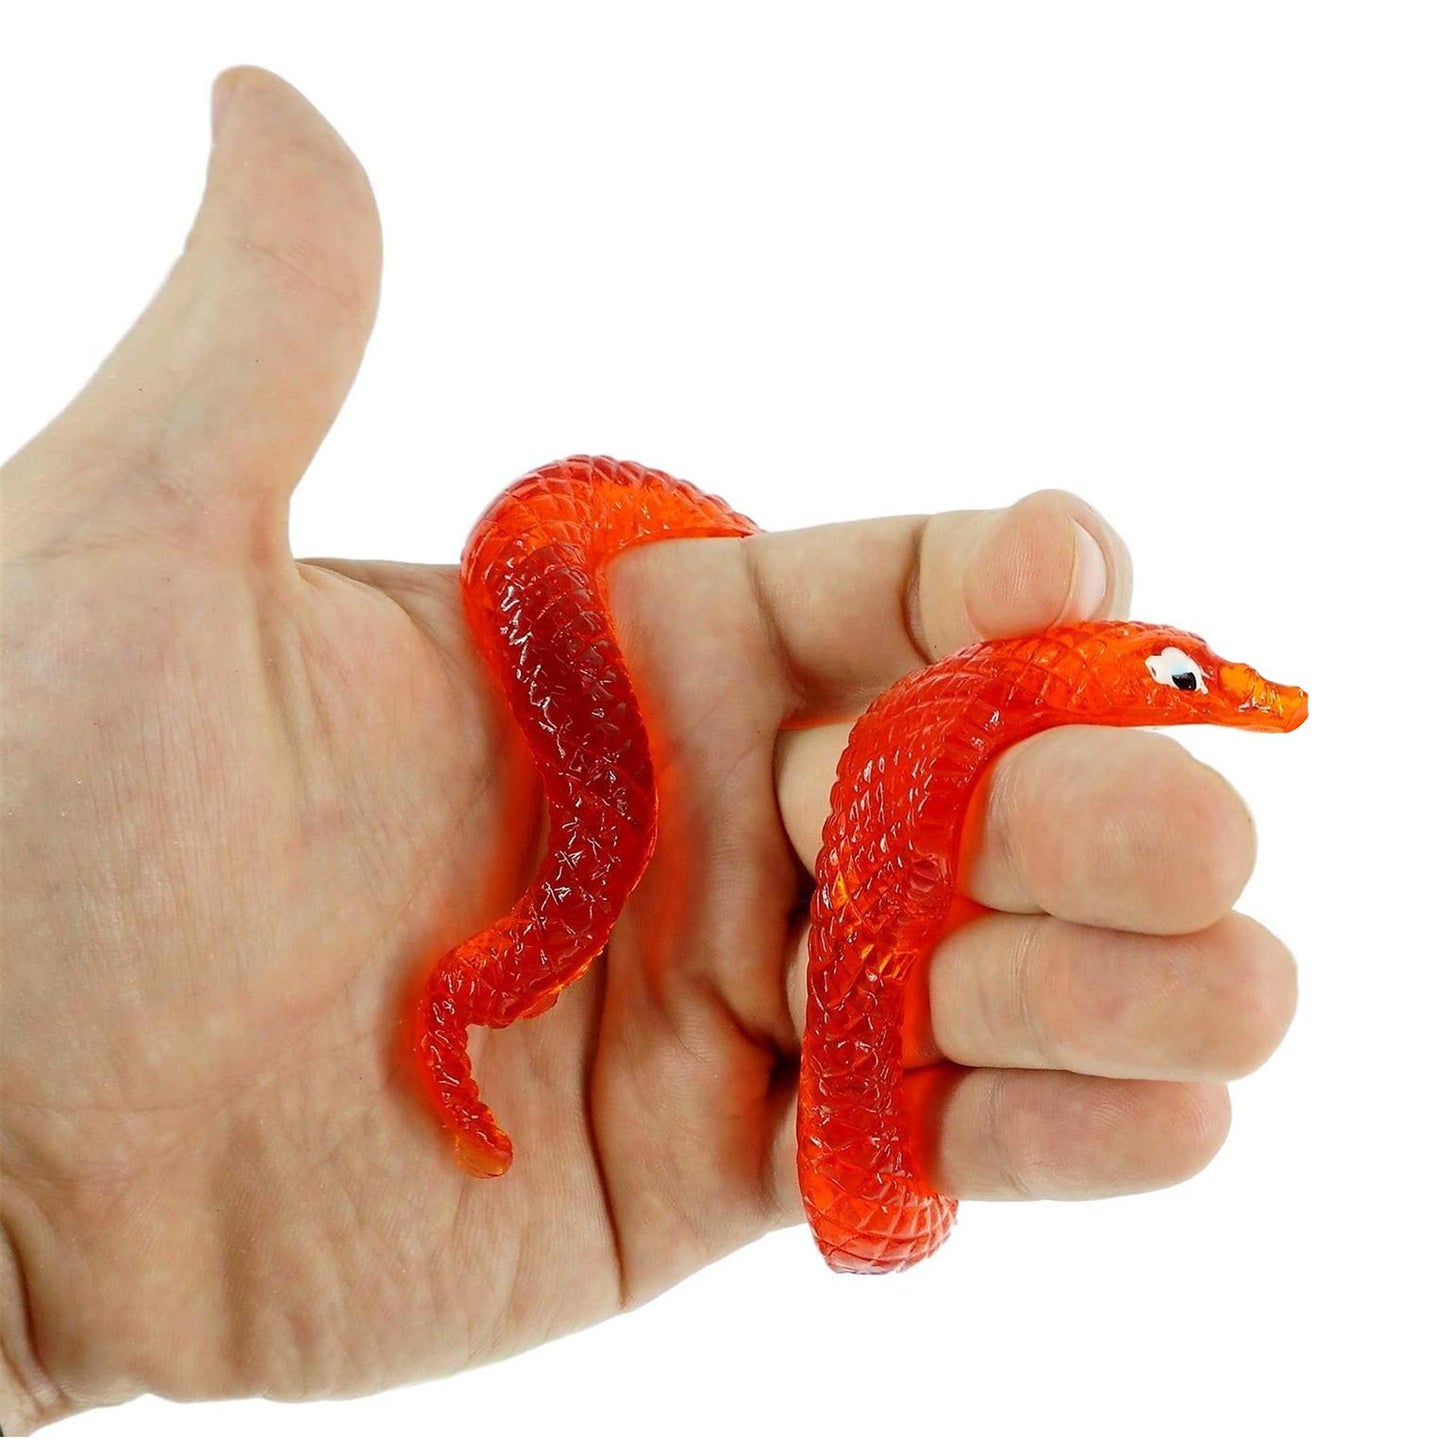 Stretchy Animal Sensory Toy by The Magic Toy Shop - UKBuyZone